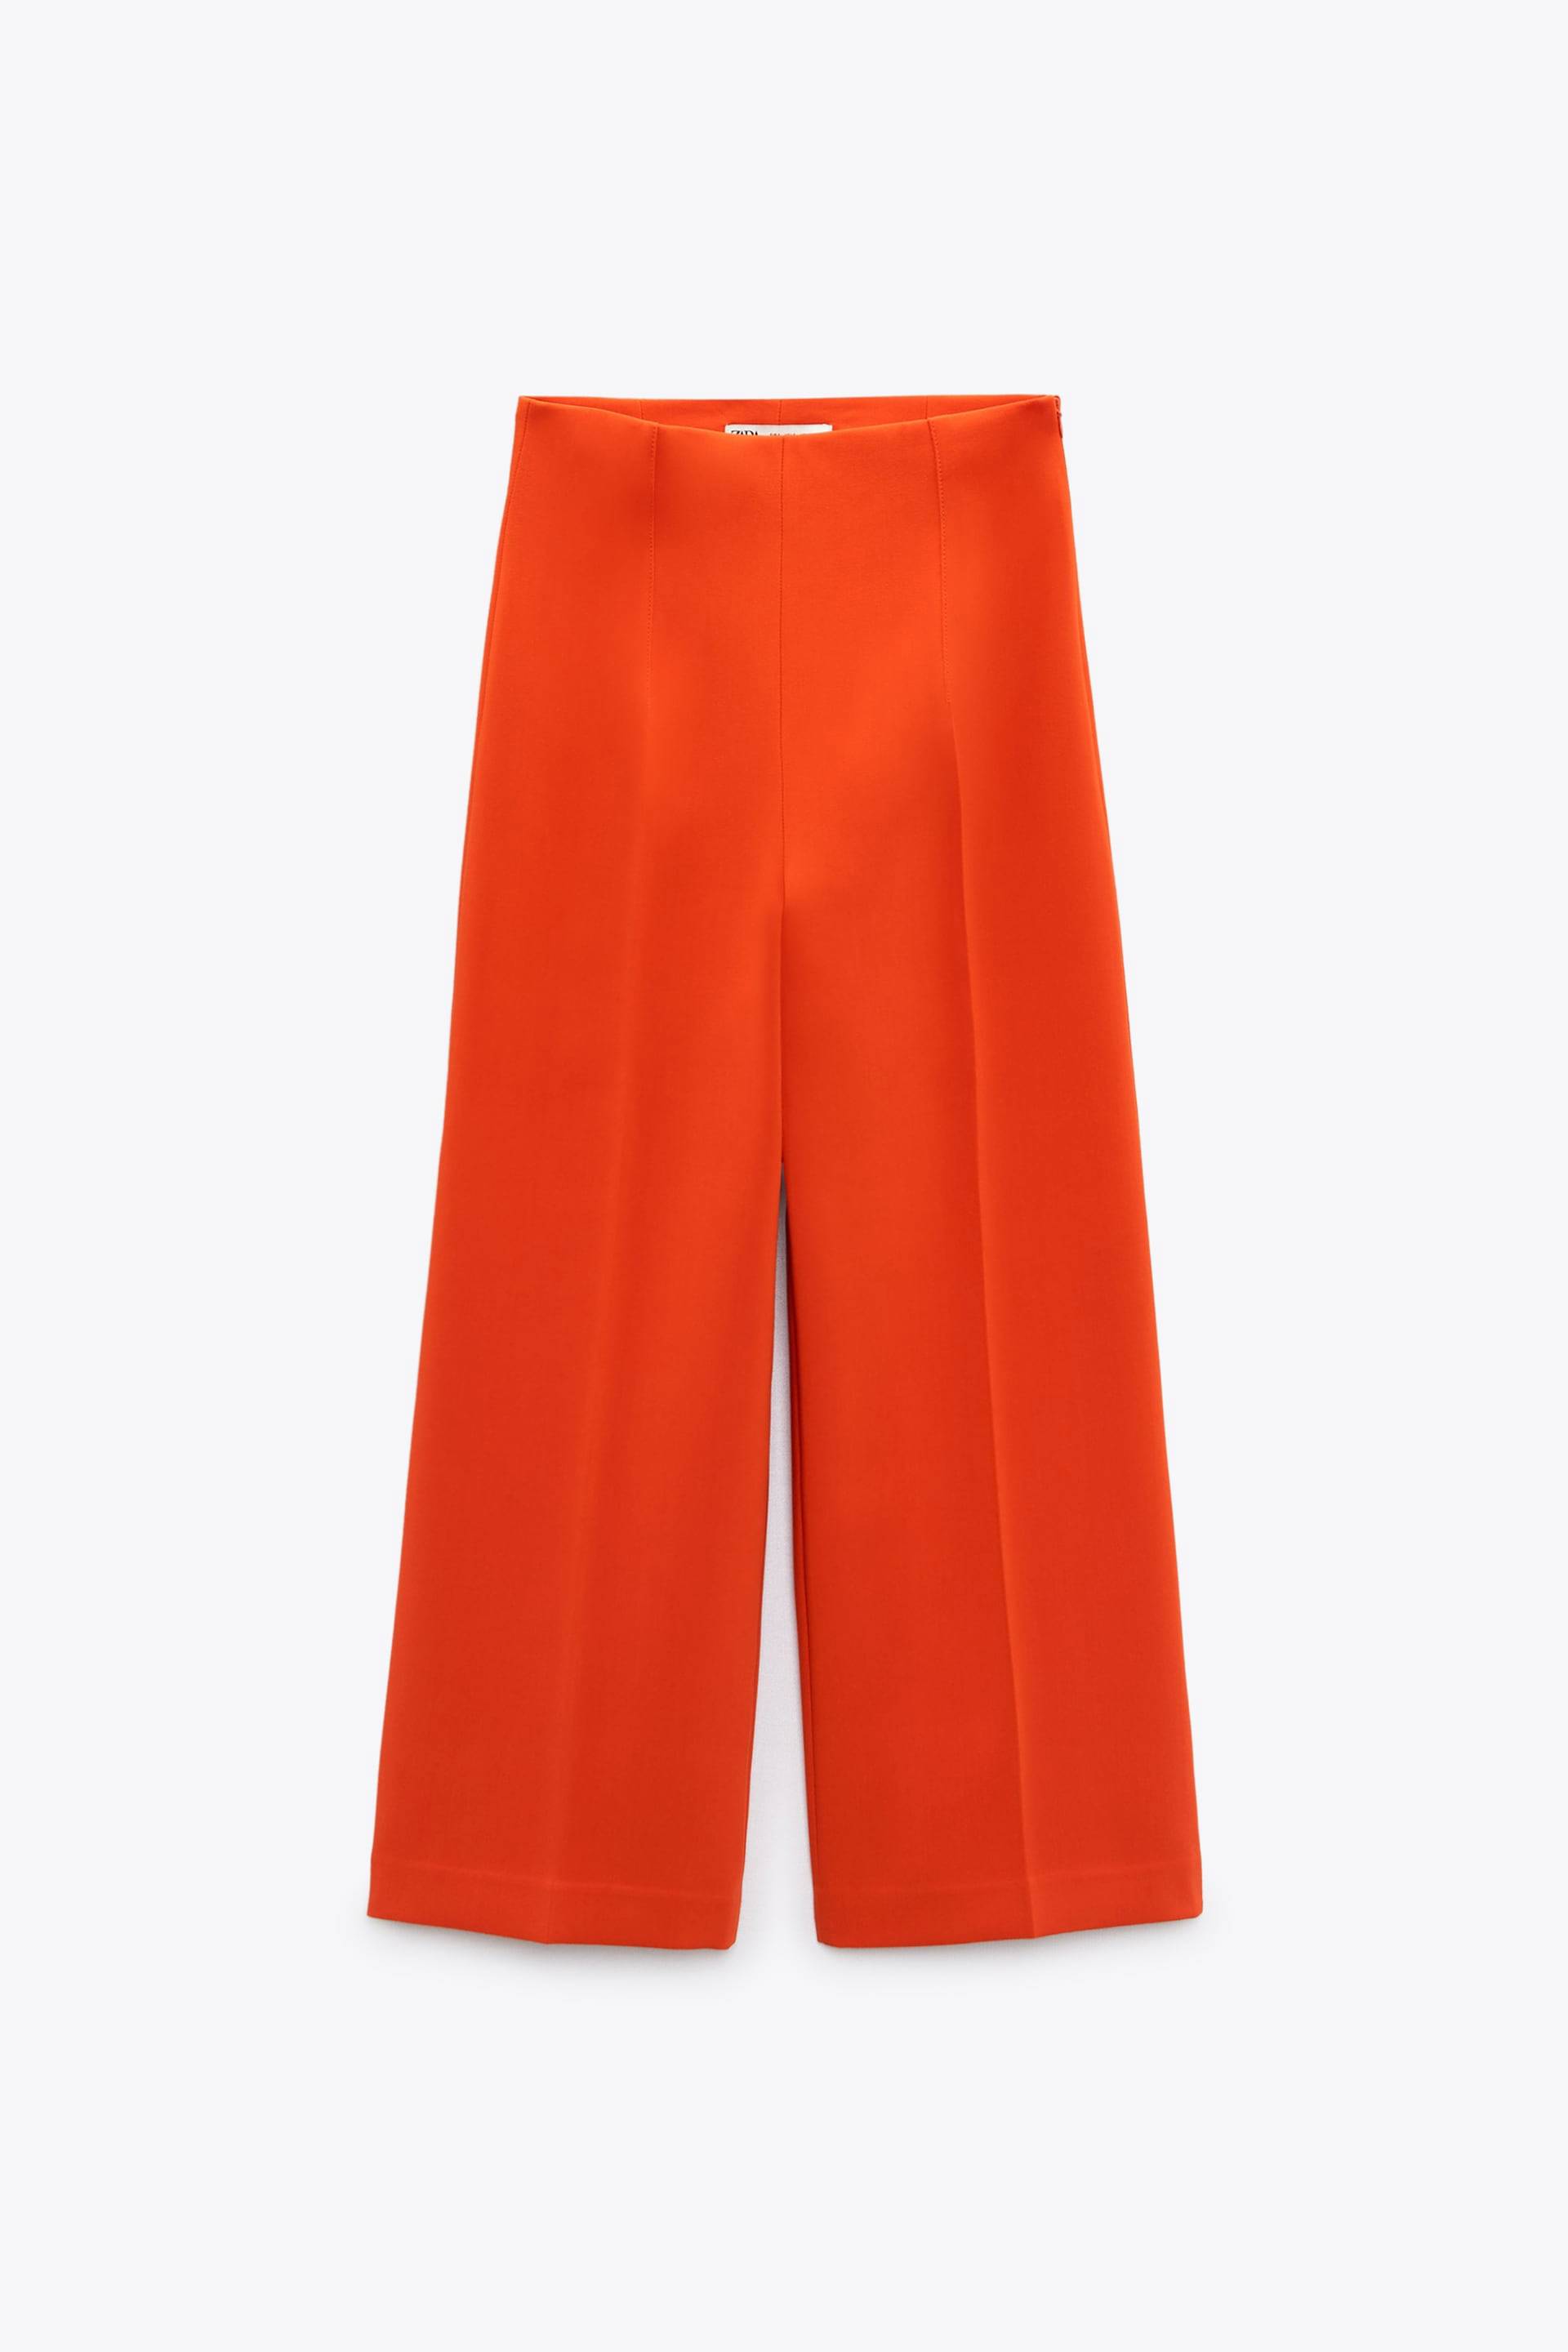 Pantalón culotte naranja de Zara